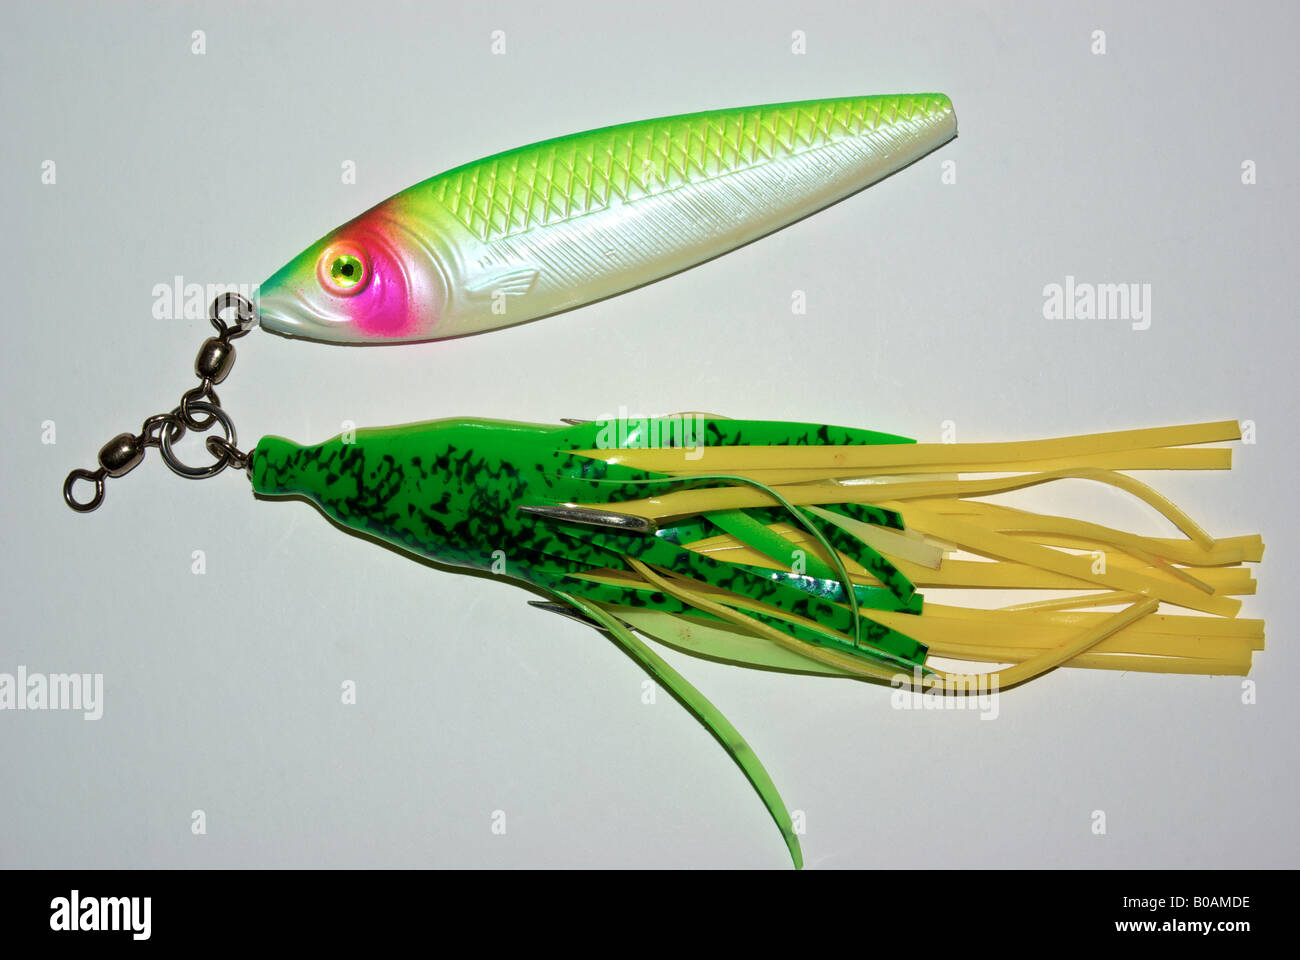 Halibut Spinnow drift jig fishing lure for bottom fish Stock Photo - Alamy